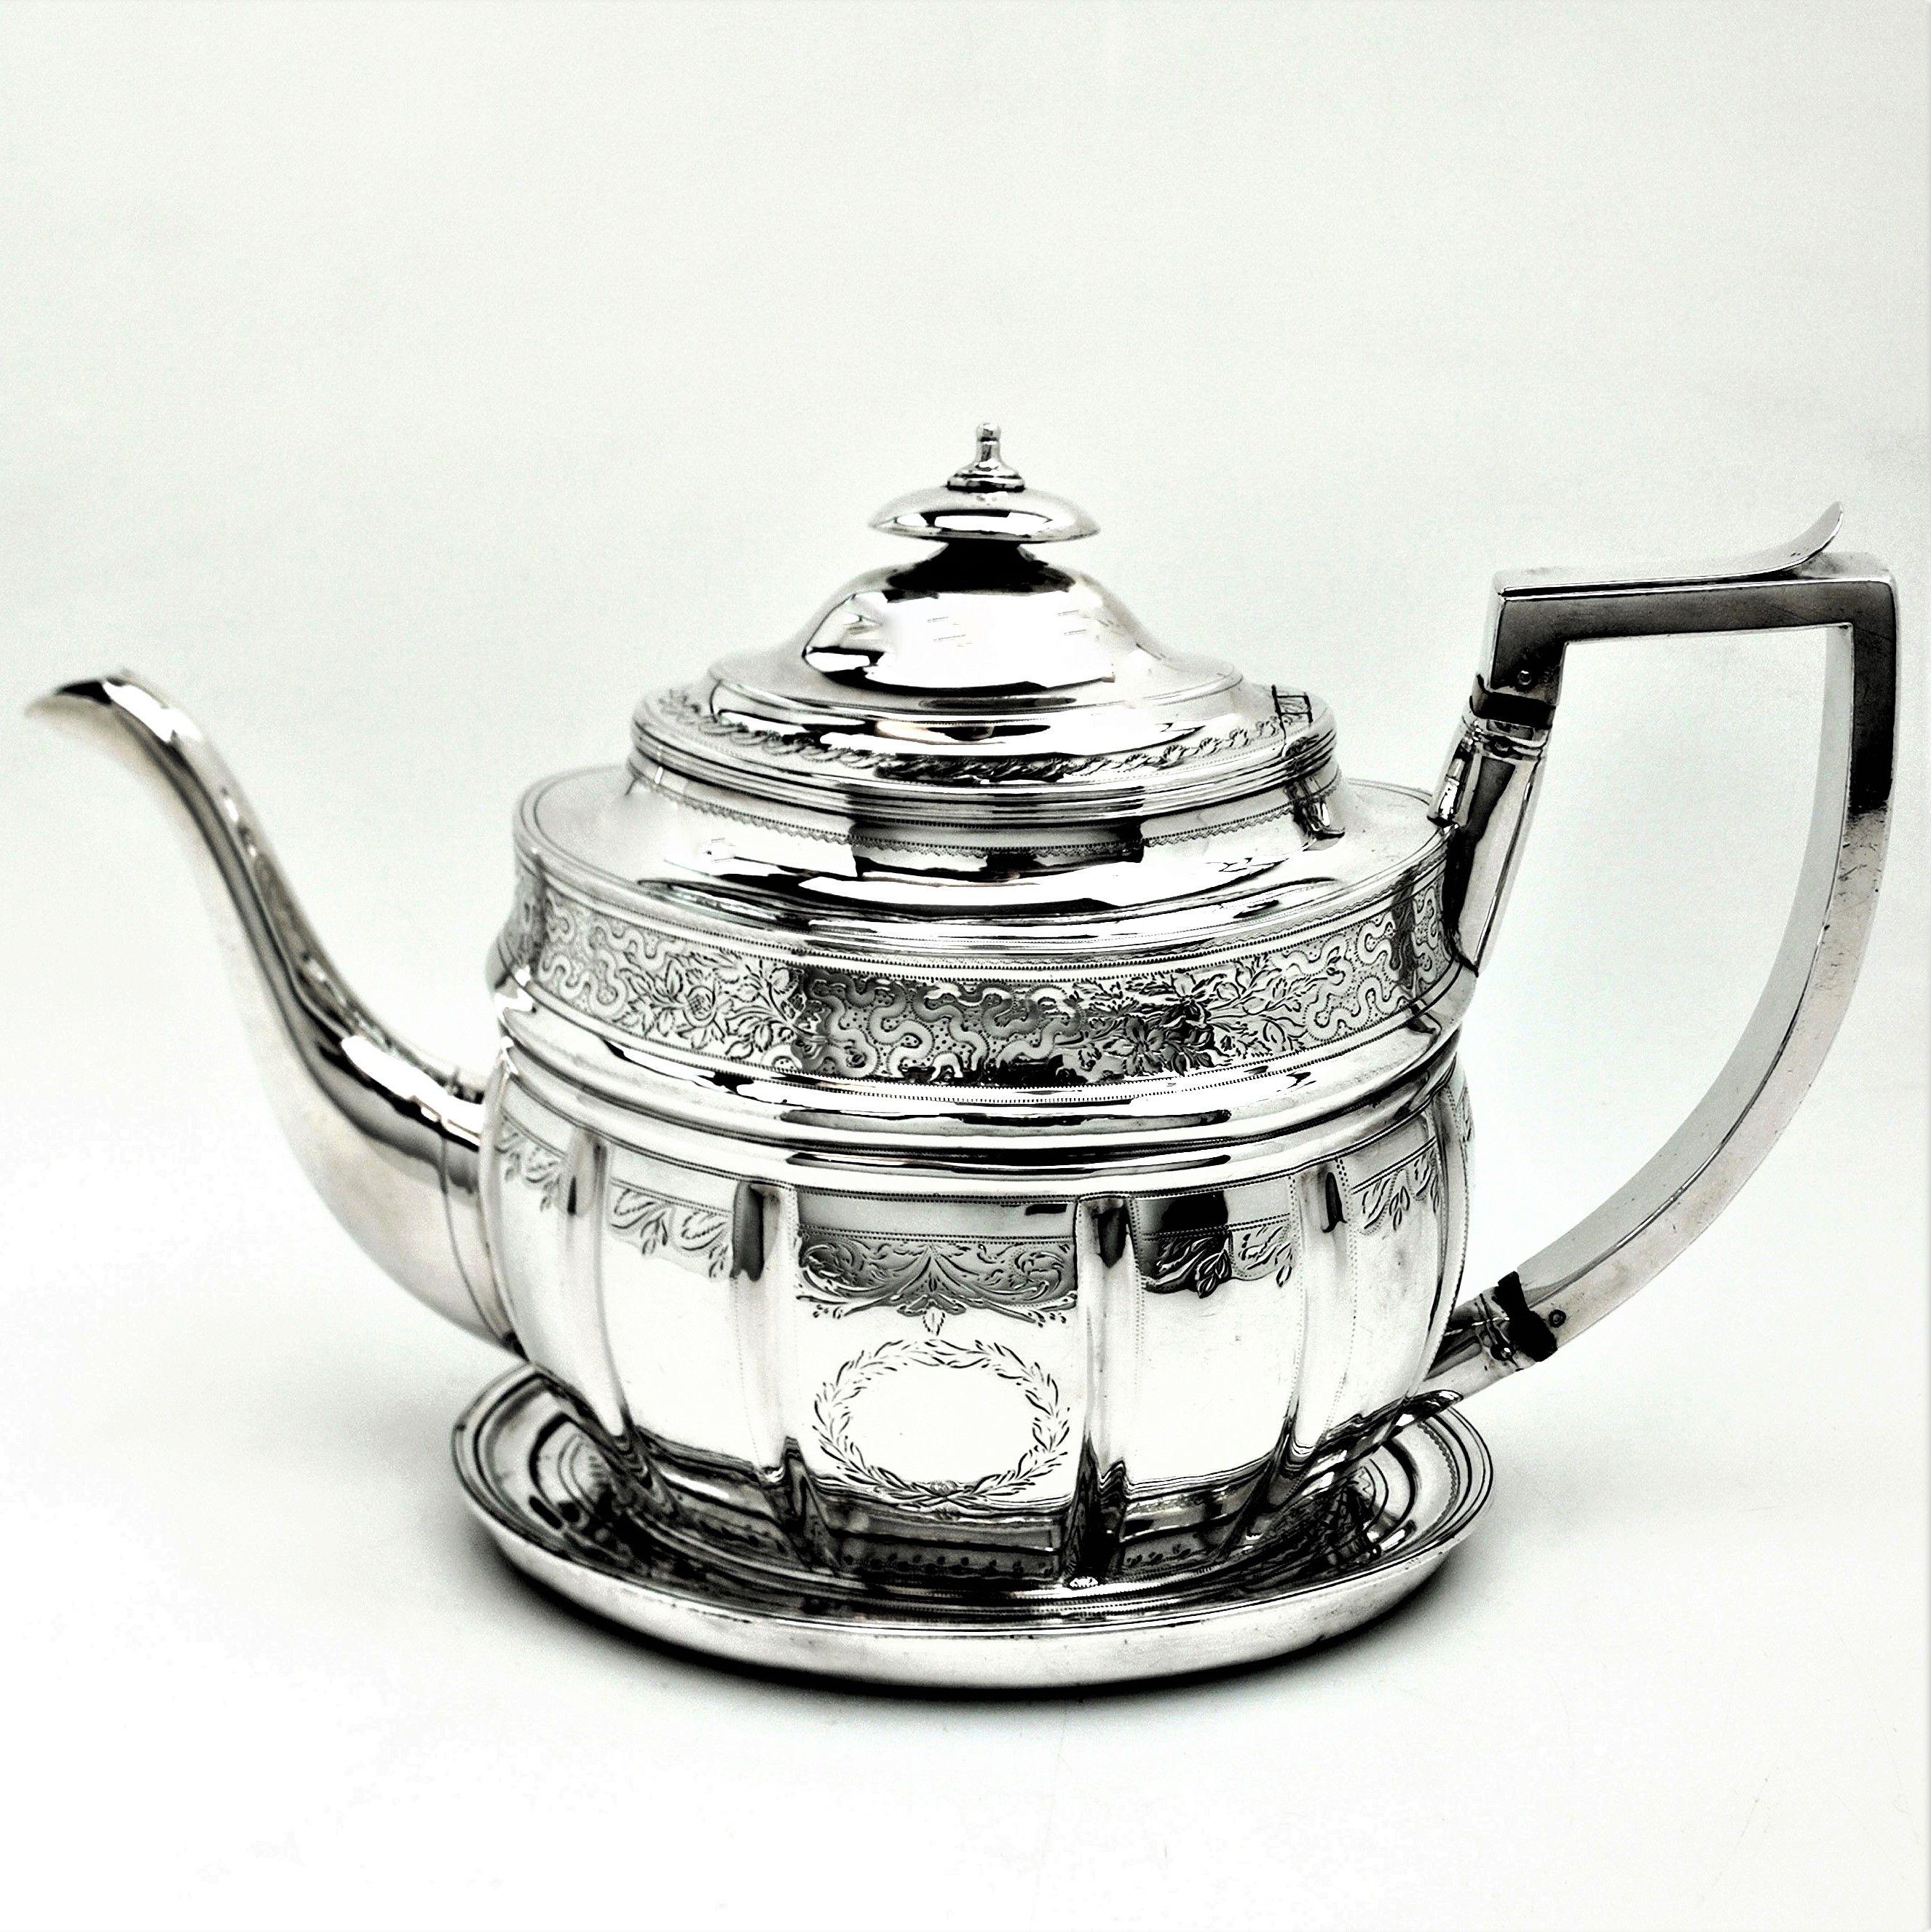 richard wright teapot